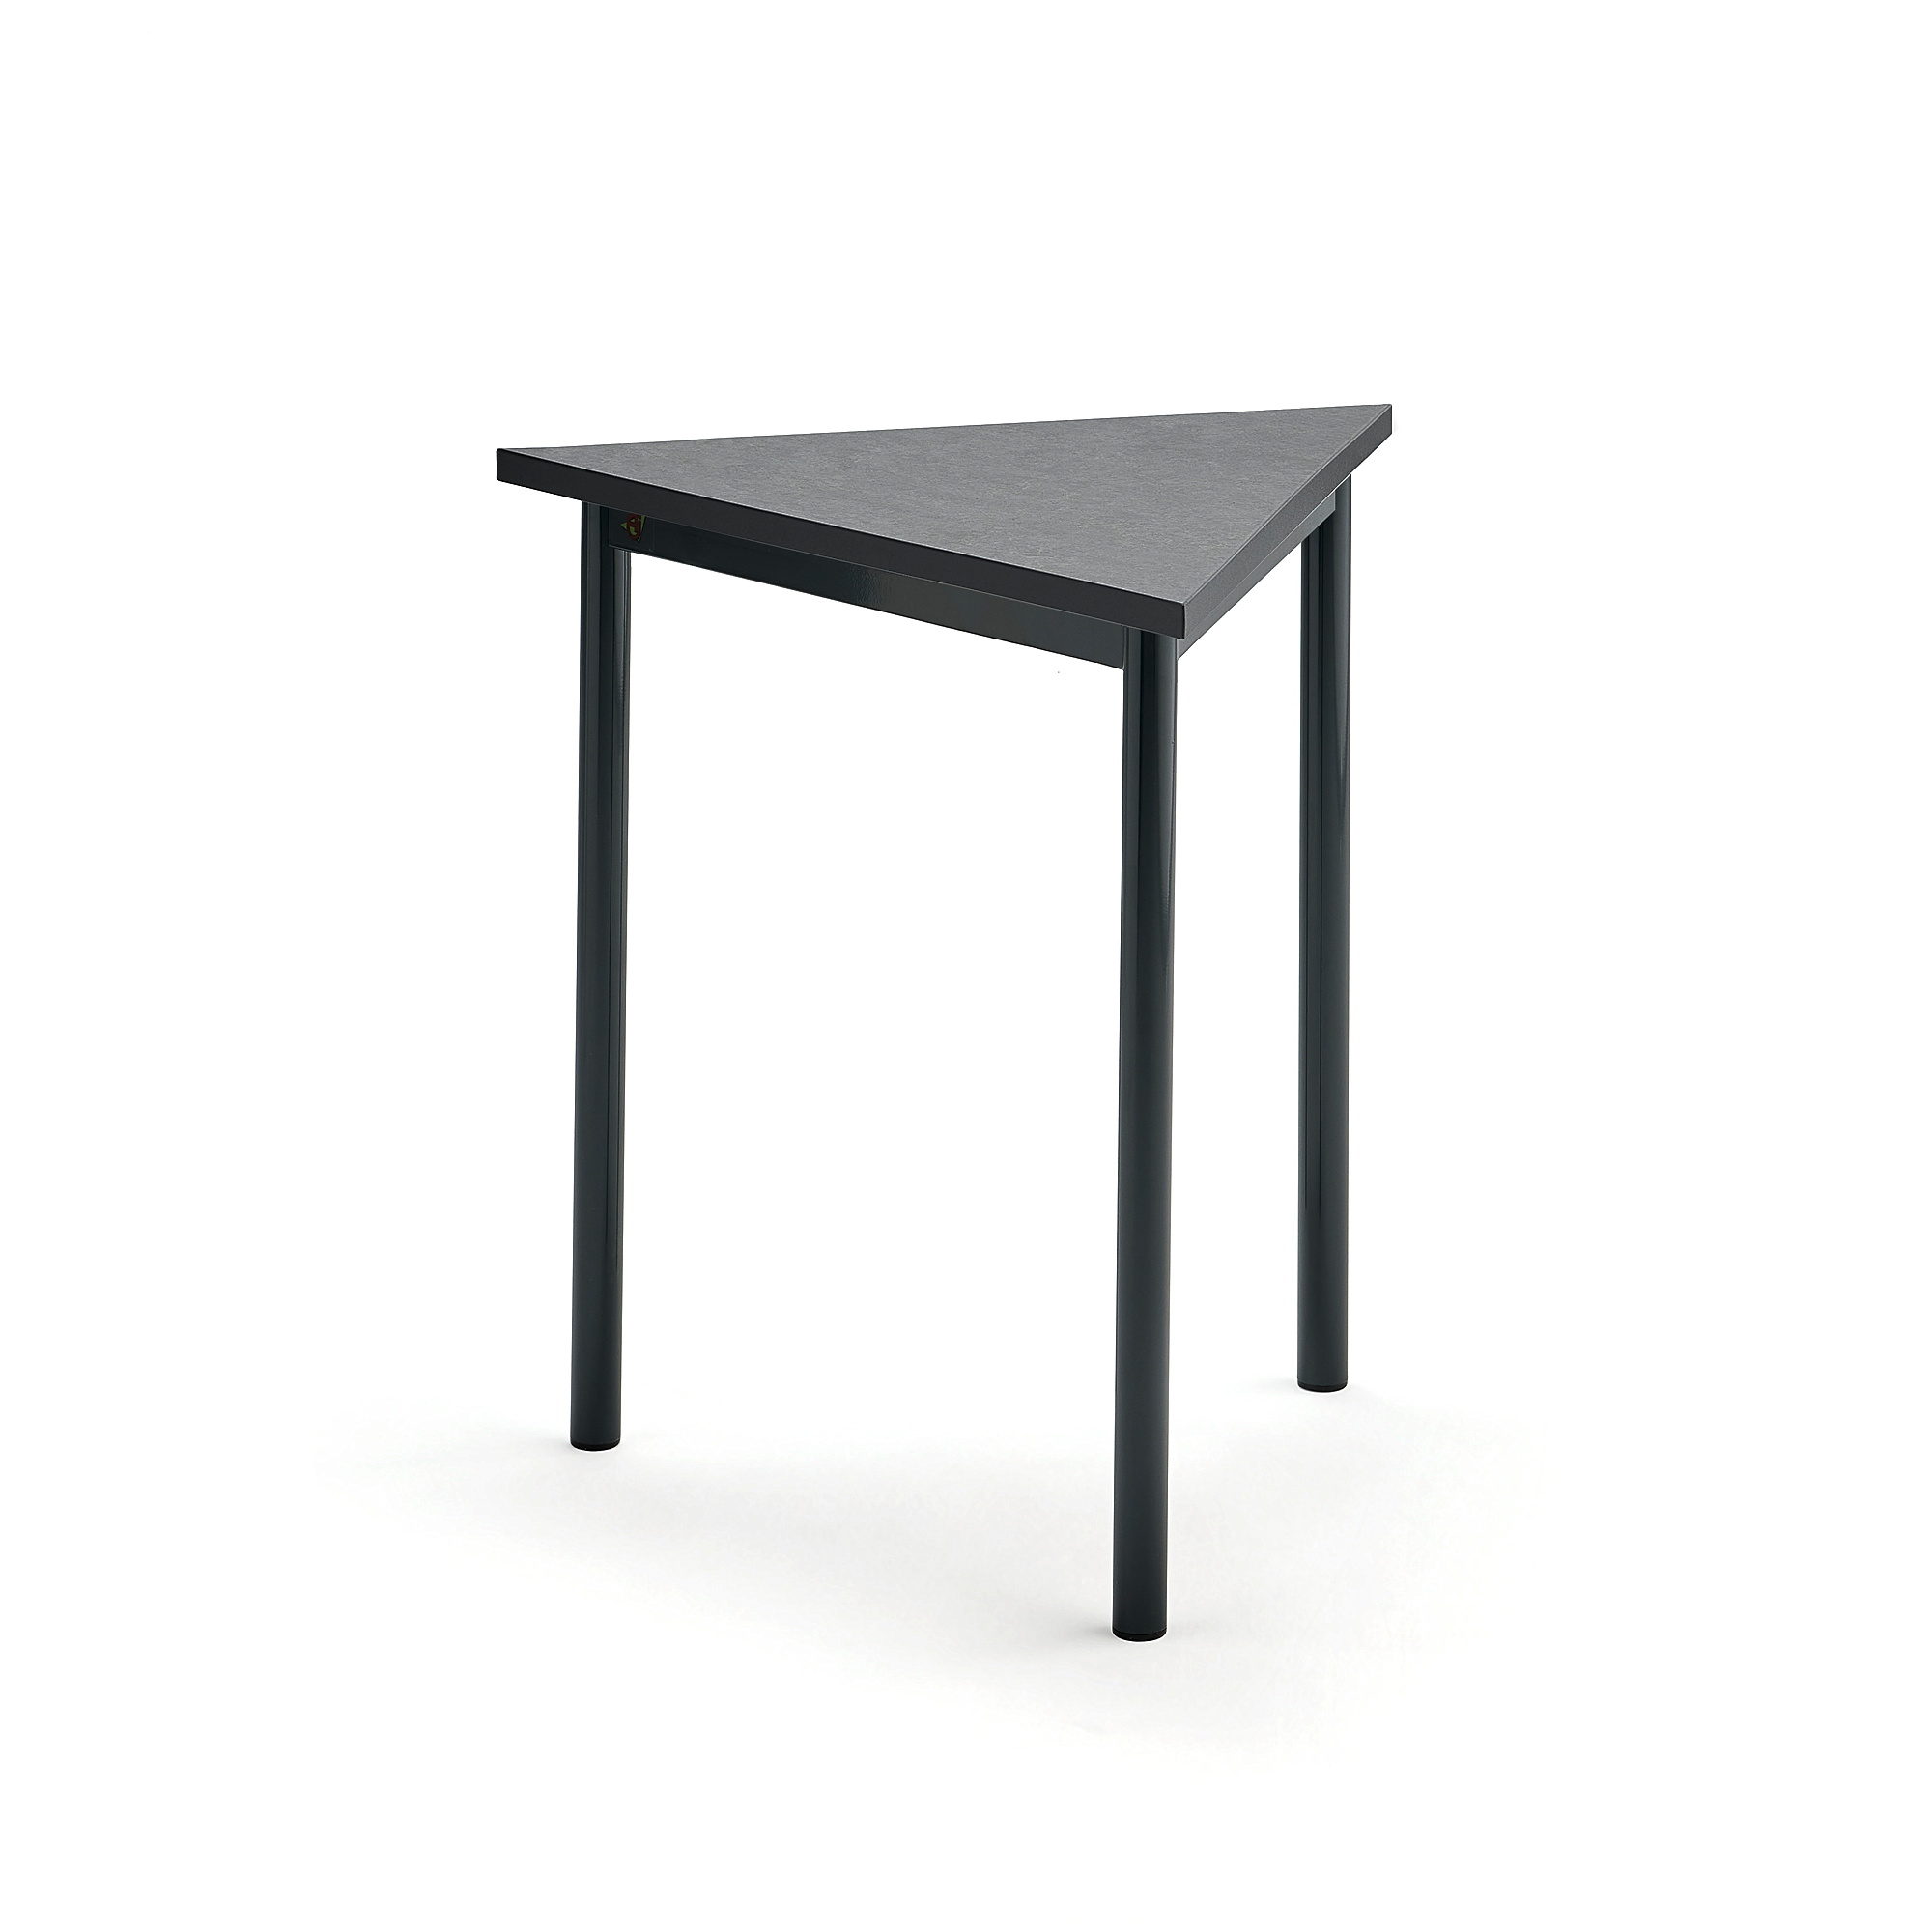 Stůl SONITUS TRIANGEL, 700x700x720 mm, antracitově šedé nohy, deska s linoleem, tmavě šedá